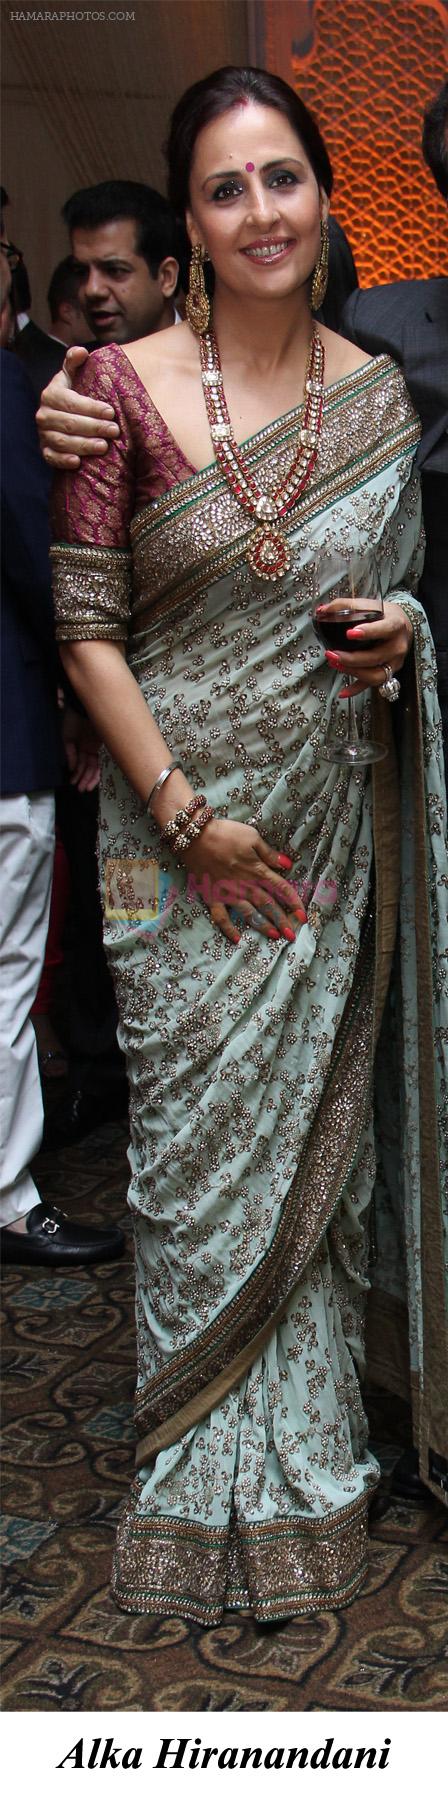 Alka Hiranandani at The wedding reception of Gayatri and Arjun Hitkari hosted by Debbie and Arun Hitkari in Taj, Colaba, Mumbai on 20th Jan 2013